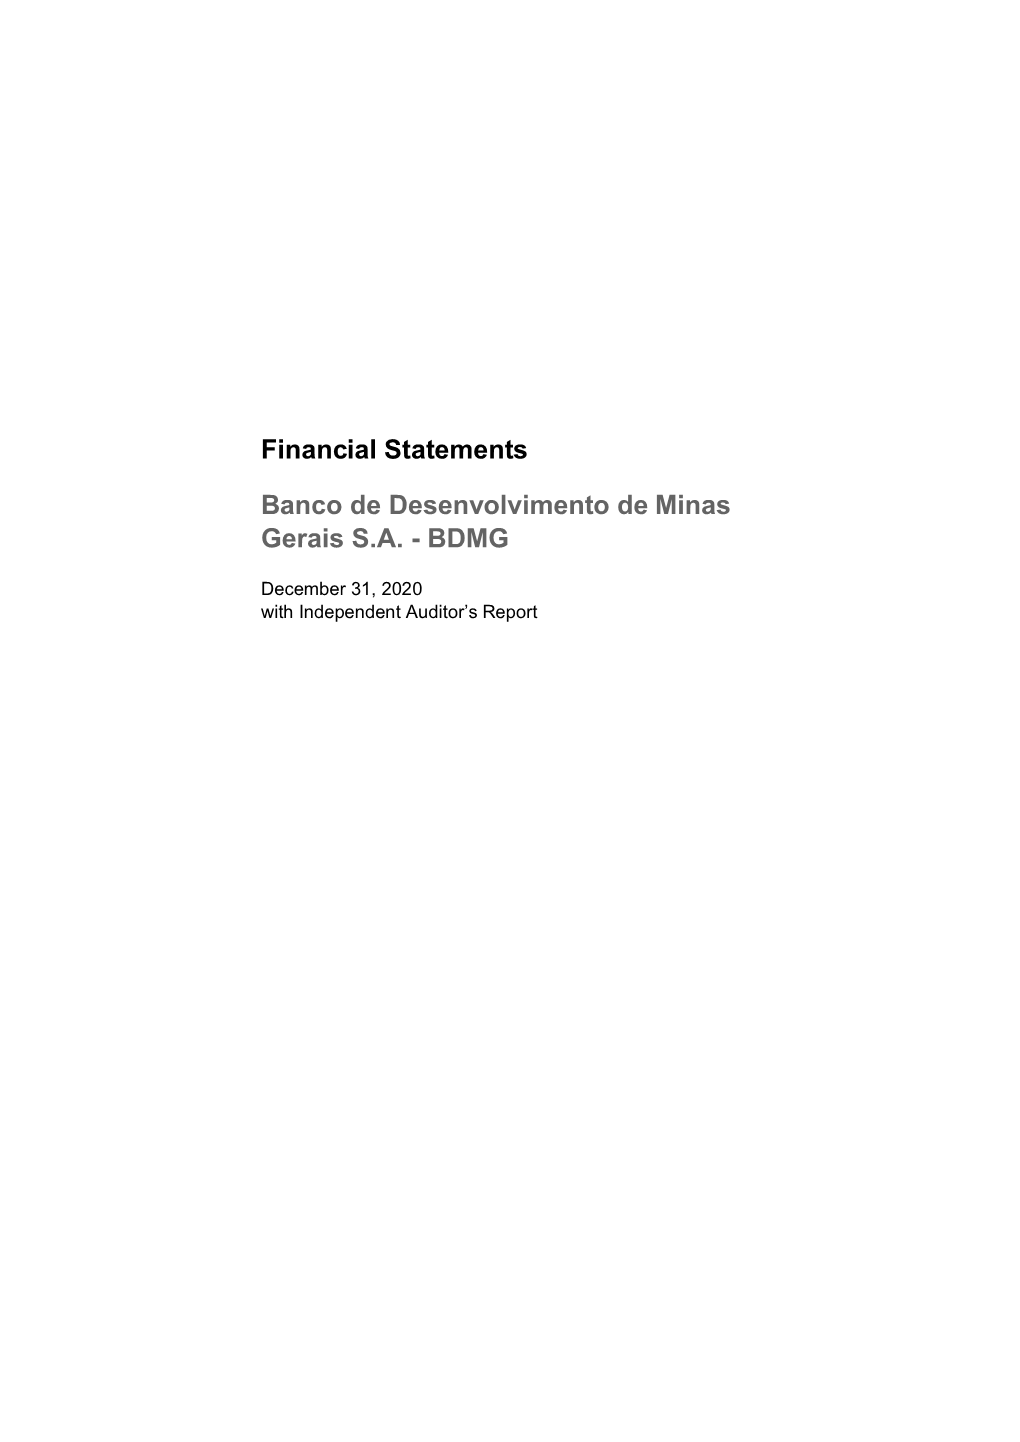 Financial Statements Banco De Desenvolvimento De Minas Gerais SA